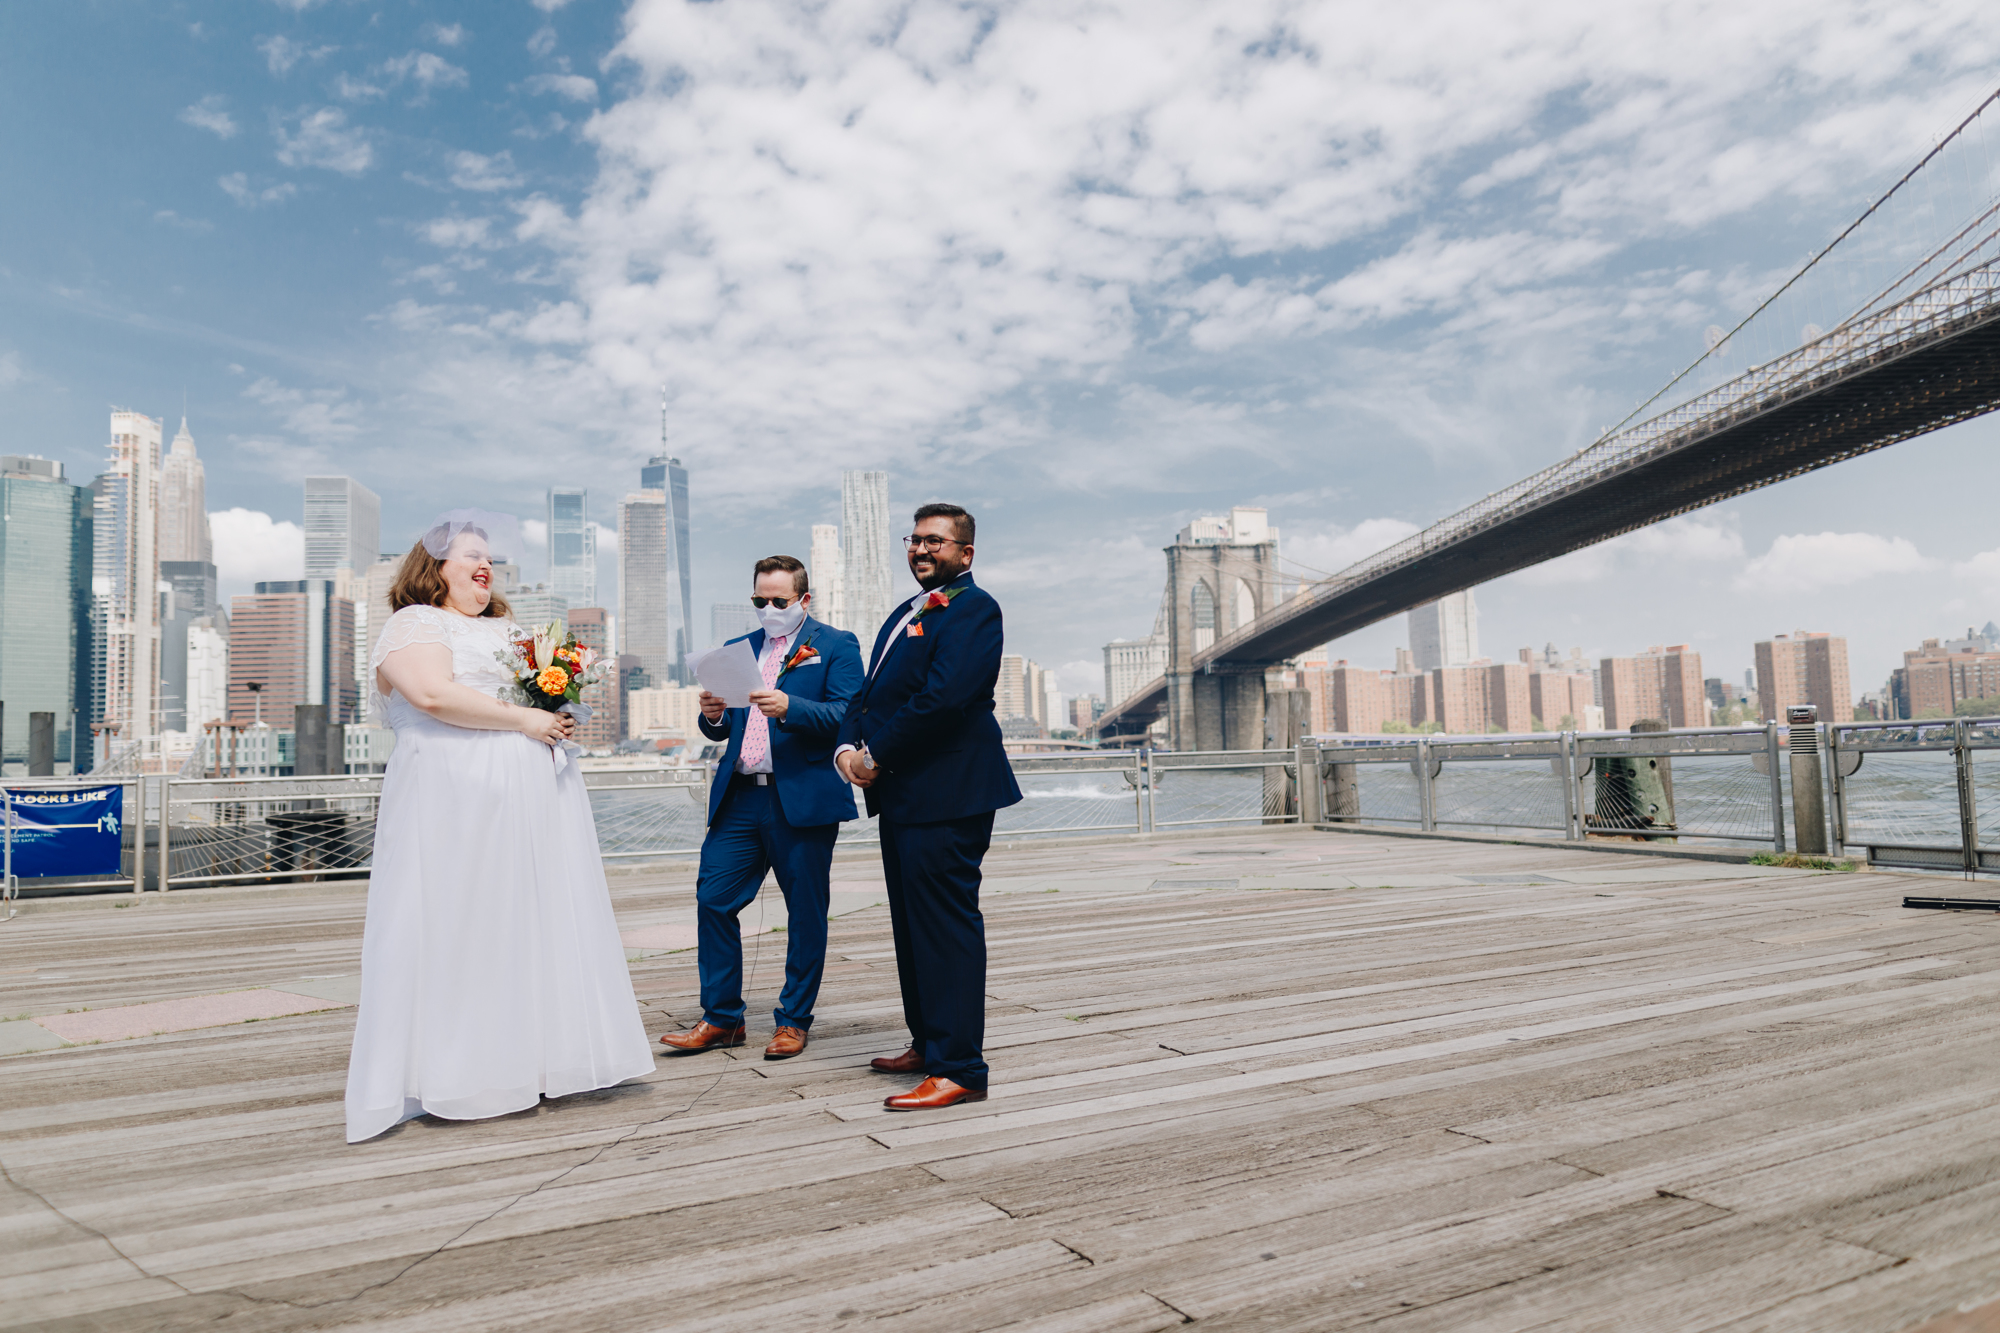 Pier A Brooklyn Bridge Park wedding photos